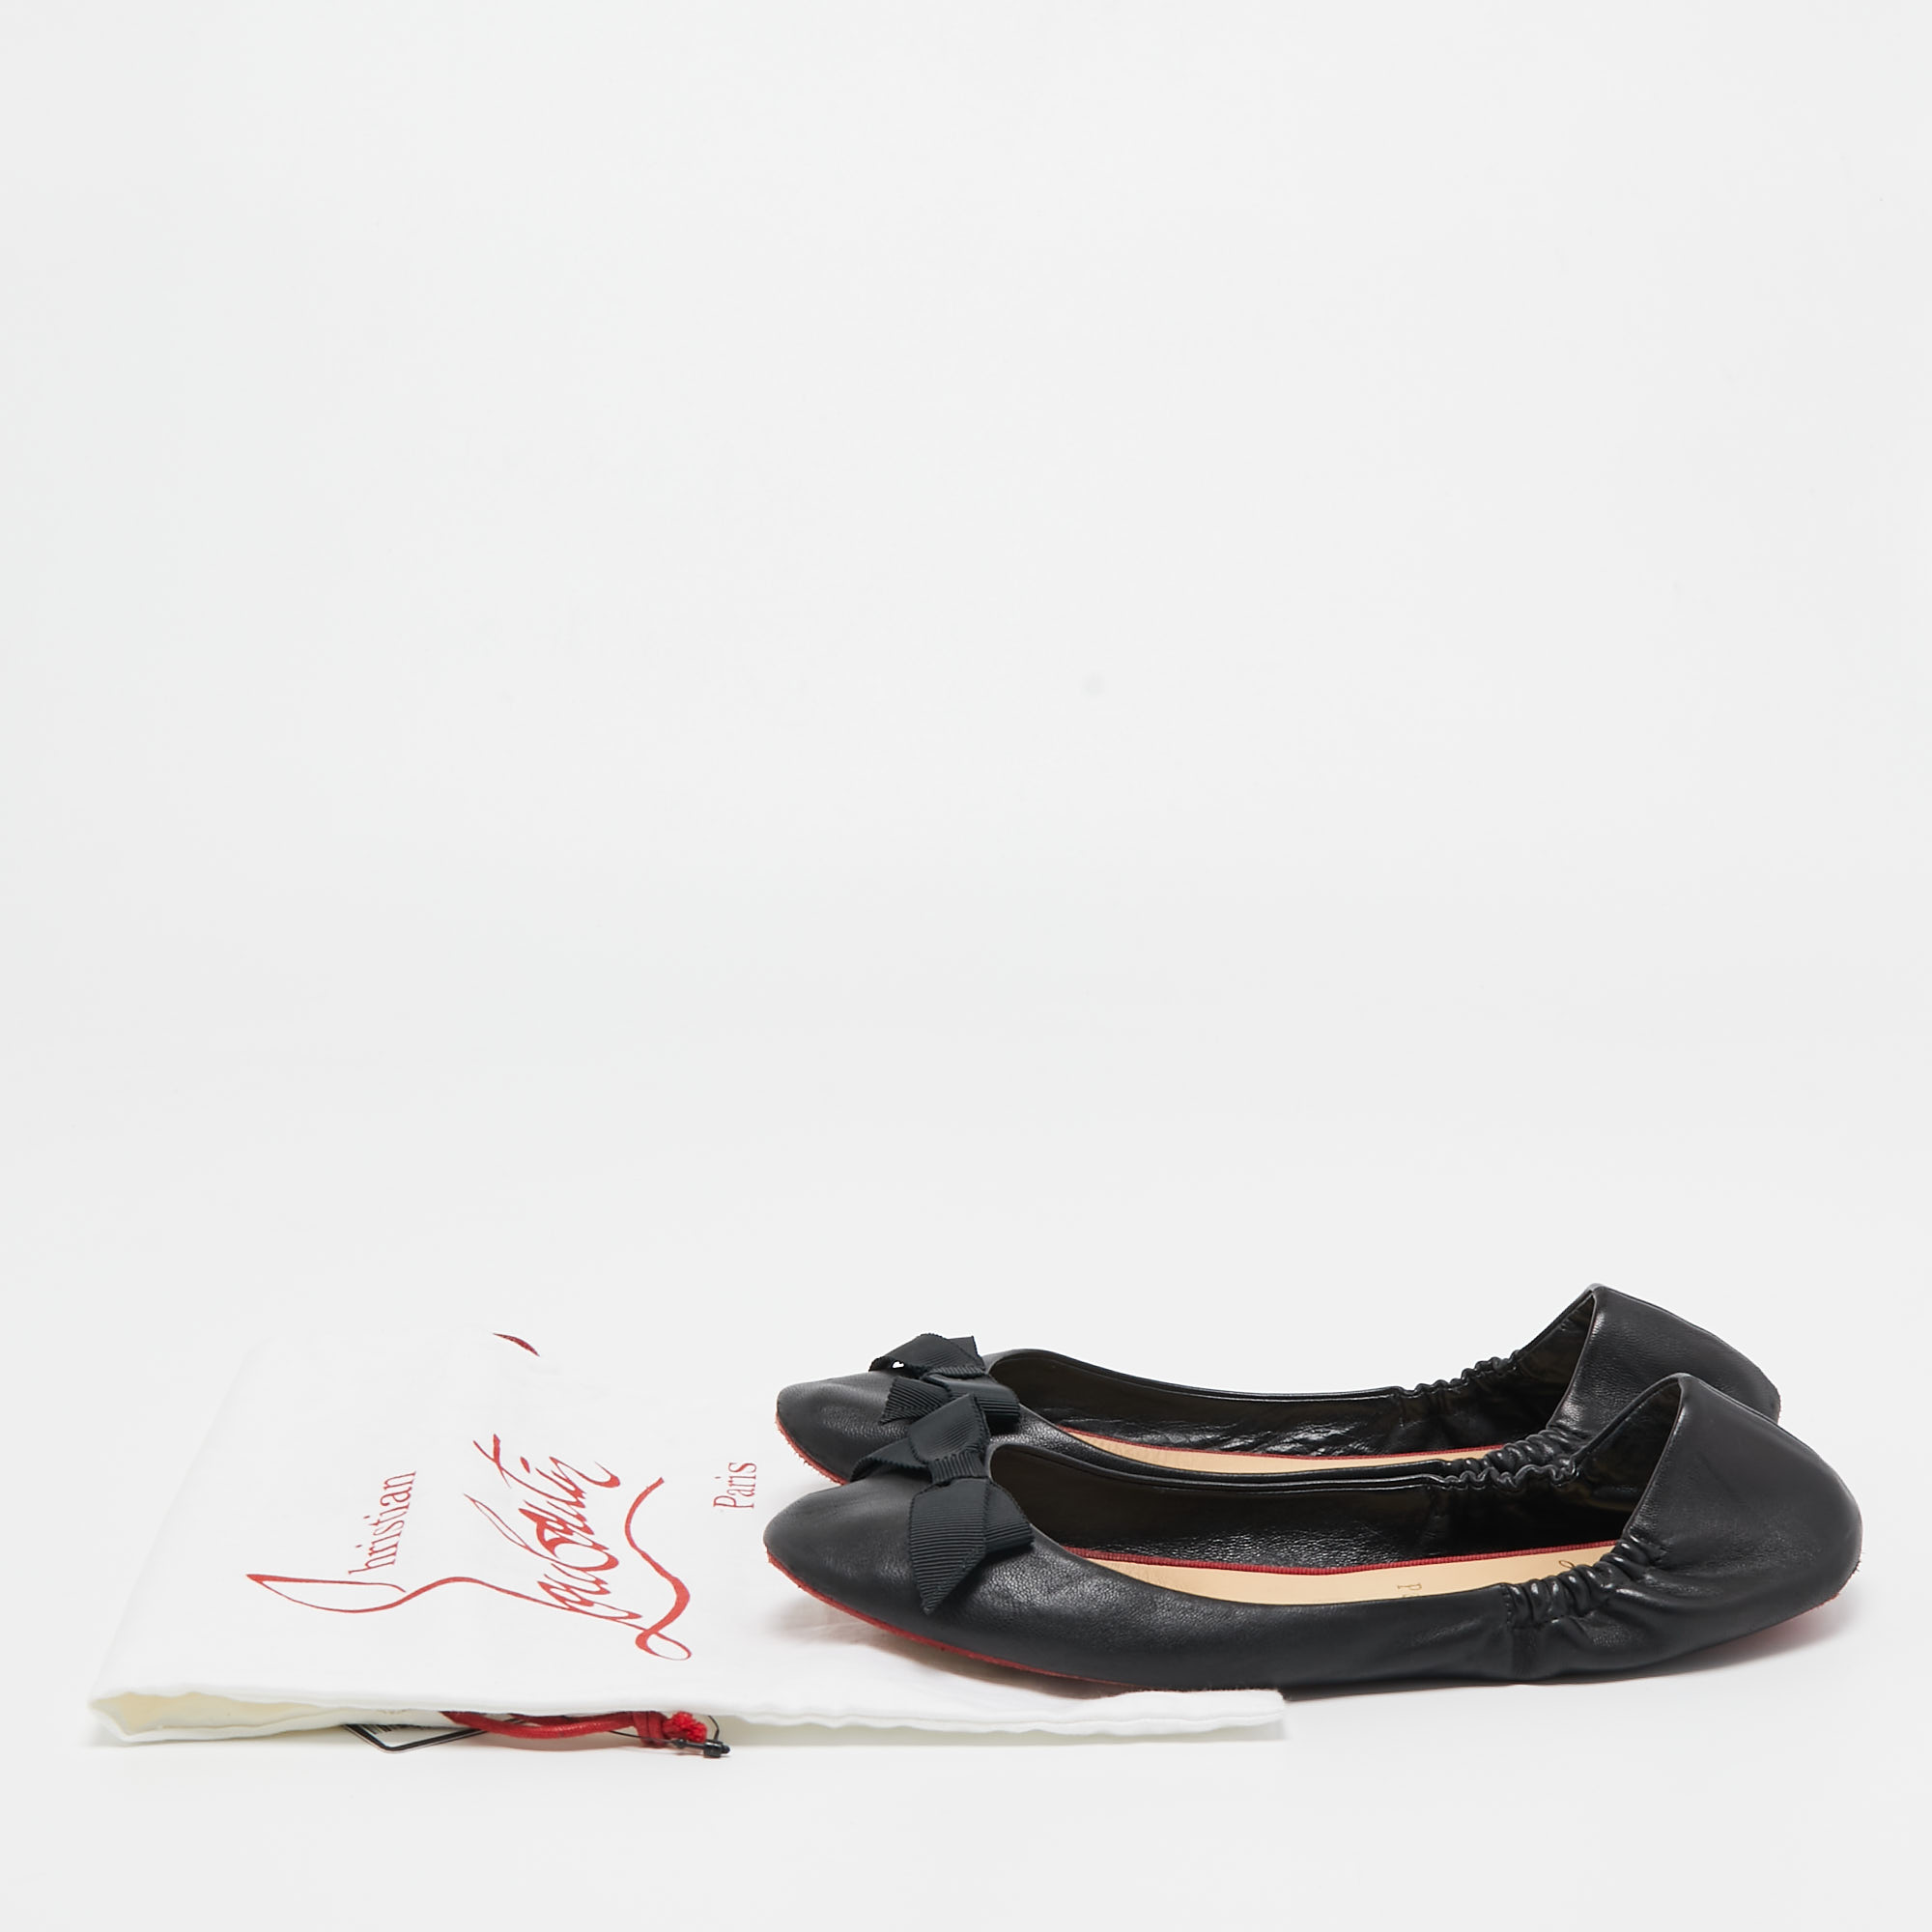 Christian Louboutin Black Leather Air Loubi Scrunch Ballet Flats Size 37.5